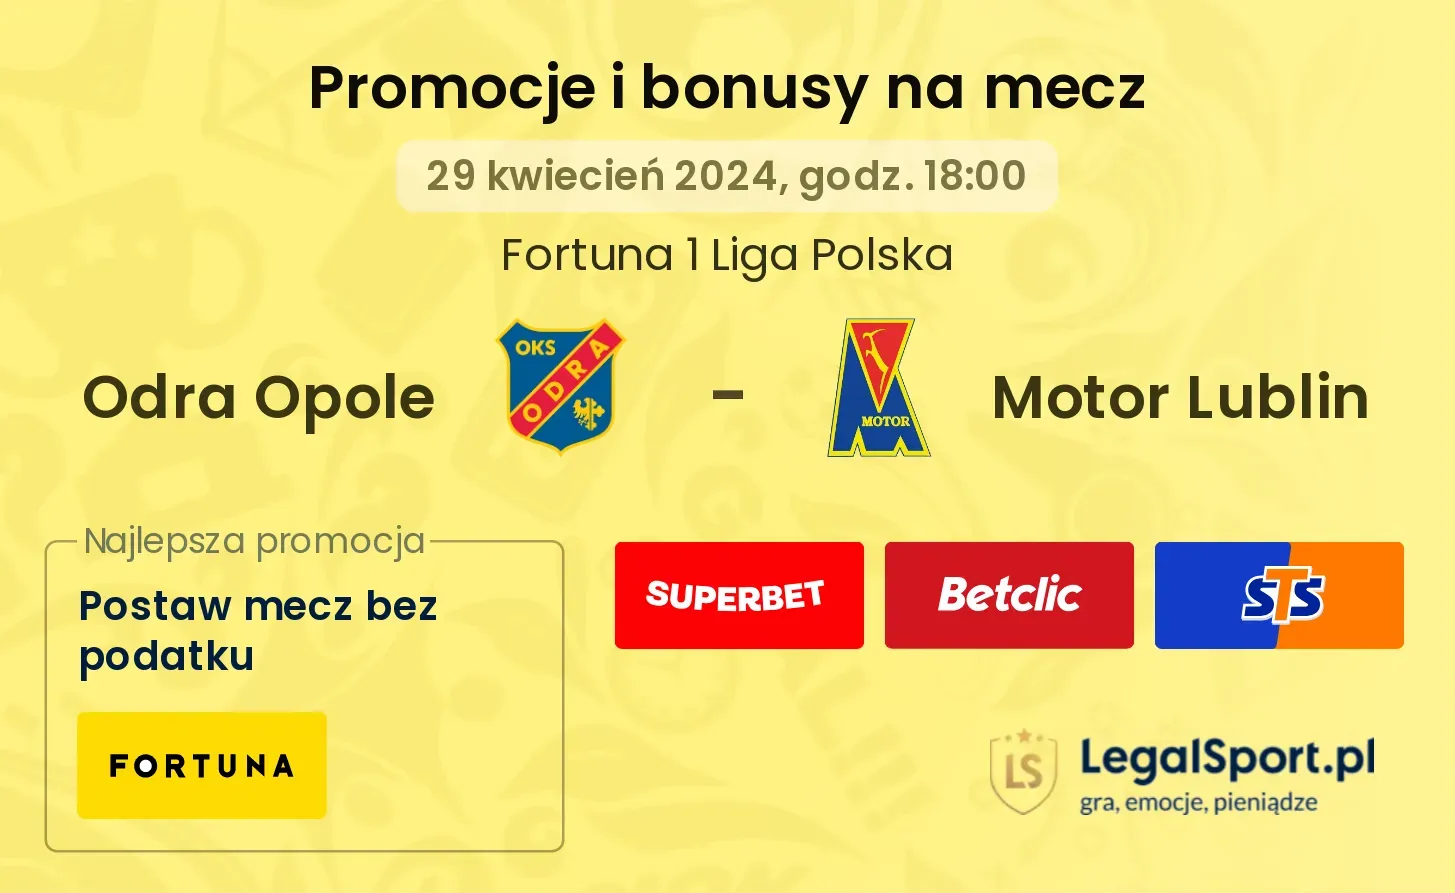 Odra Opole - Motor Lublin promocje bonusy na mecz